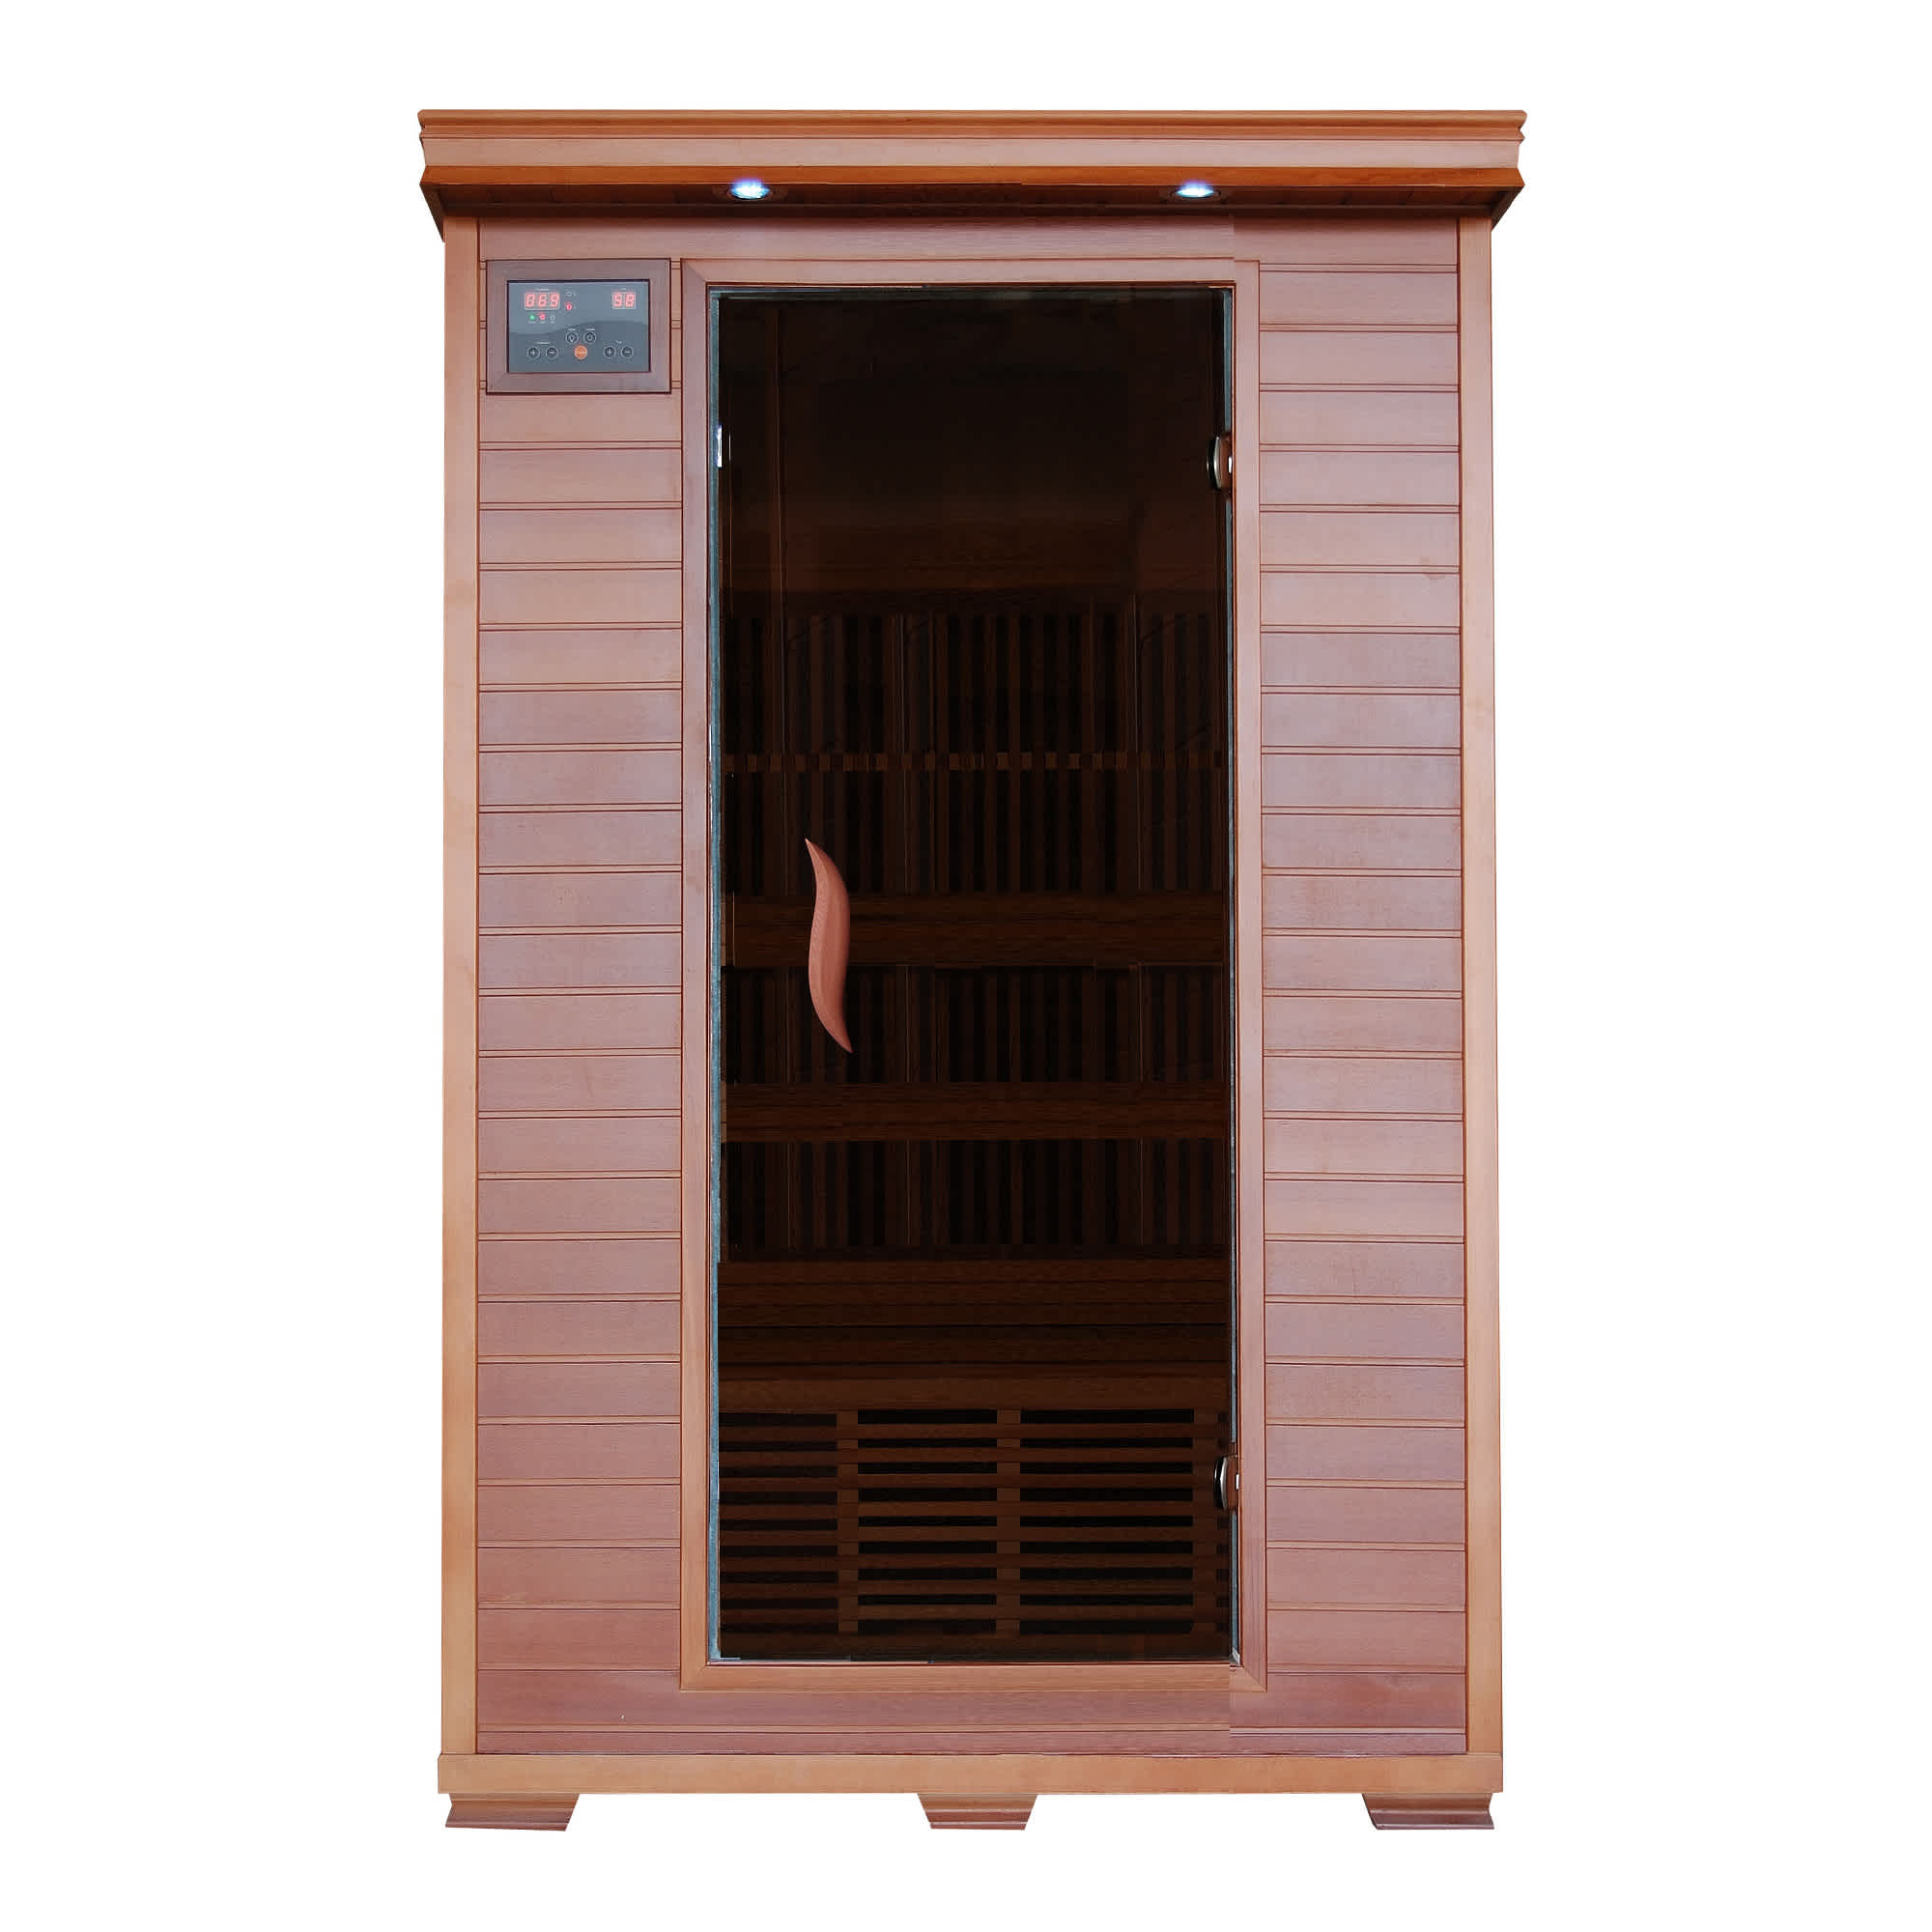 Infrared 2 Person Cedar Home Sauna With Carbon Heaters By Heatwave Saunas - Yukon - SA1309